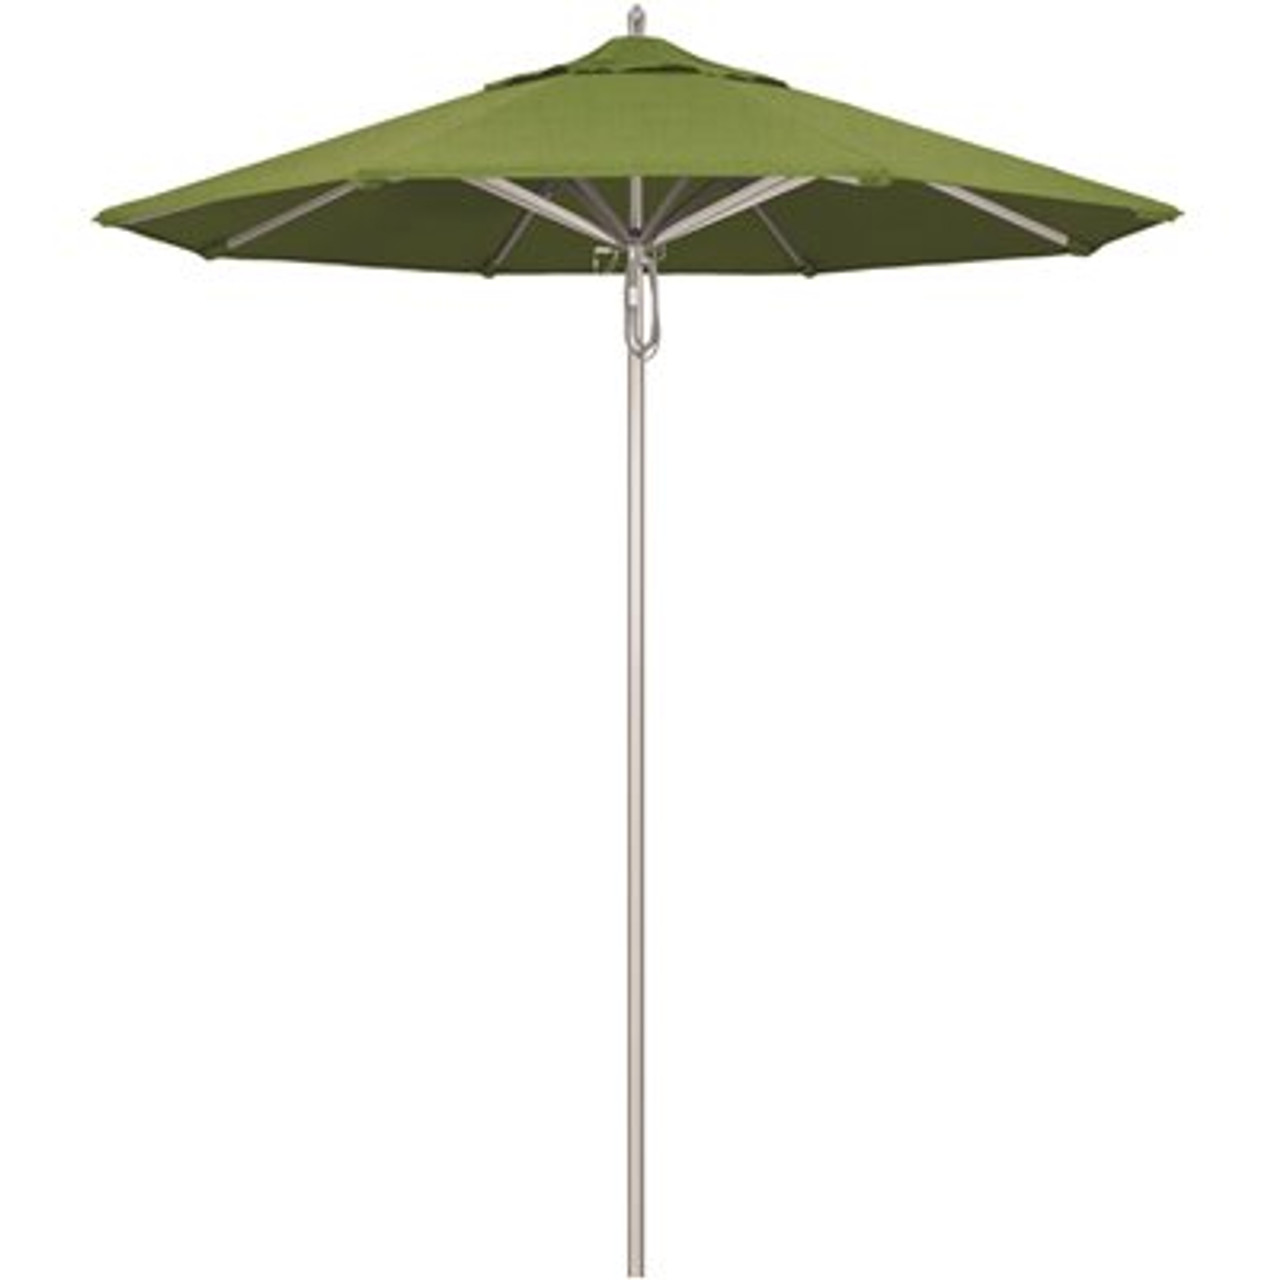 California Umbrella 7.5 ft. Silver Aluminum Commercial Market Patio Umbrella with Pulley Lift in Specturm Cilantro Sunbrella